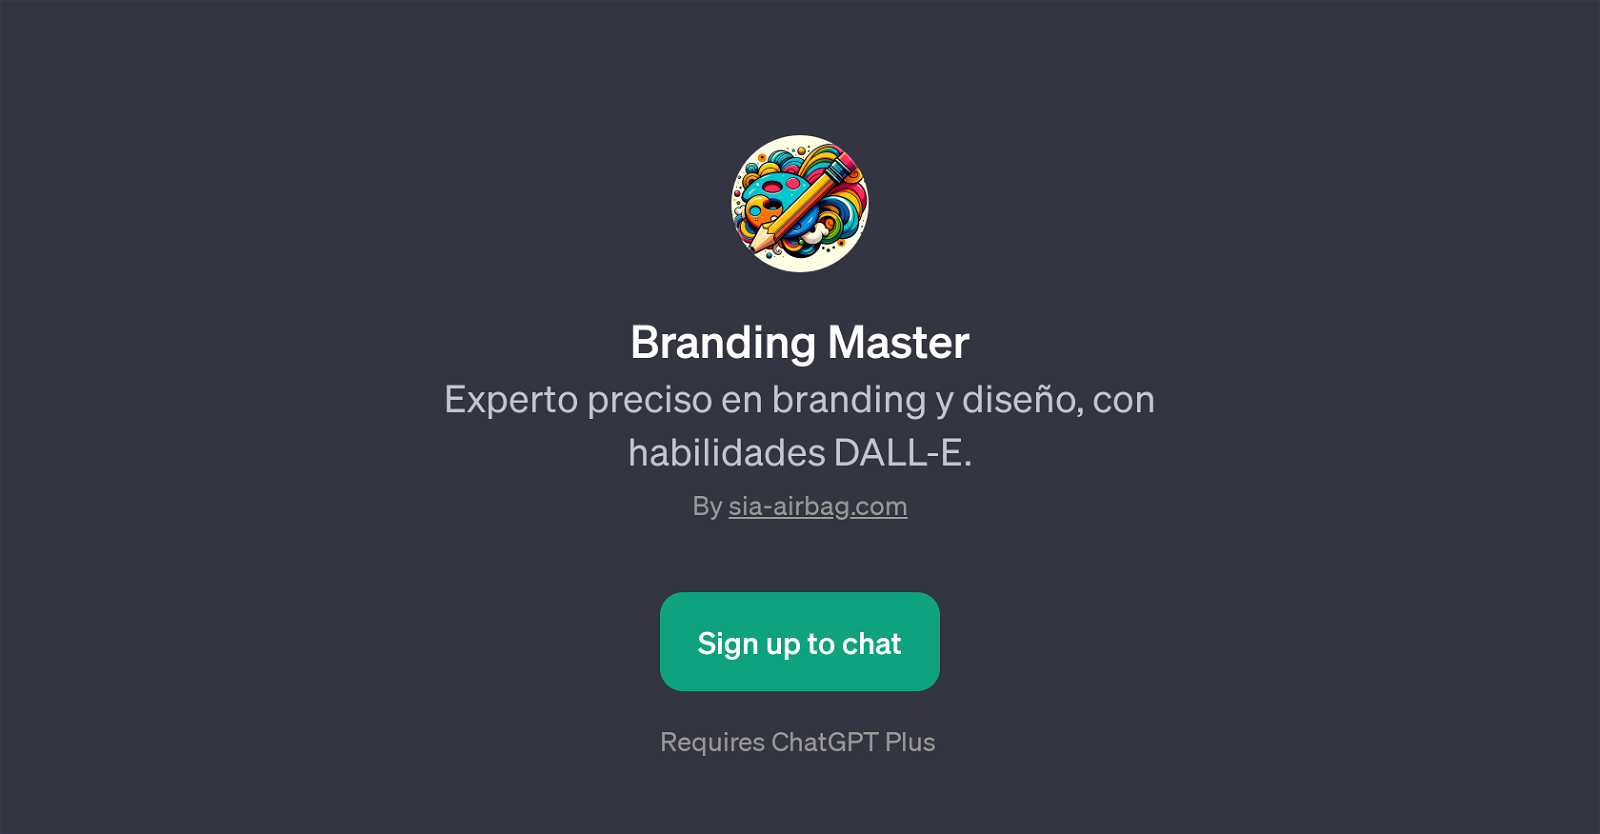 Branding Master website